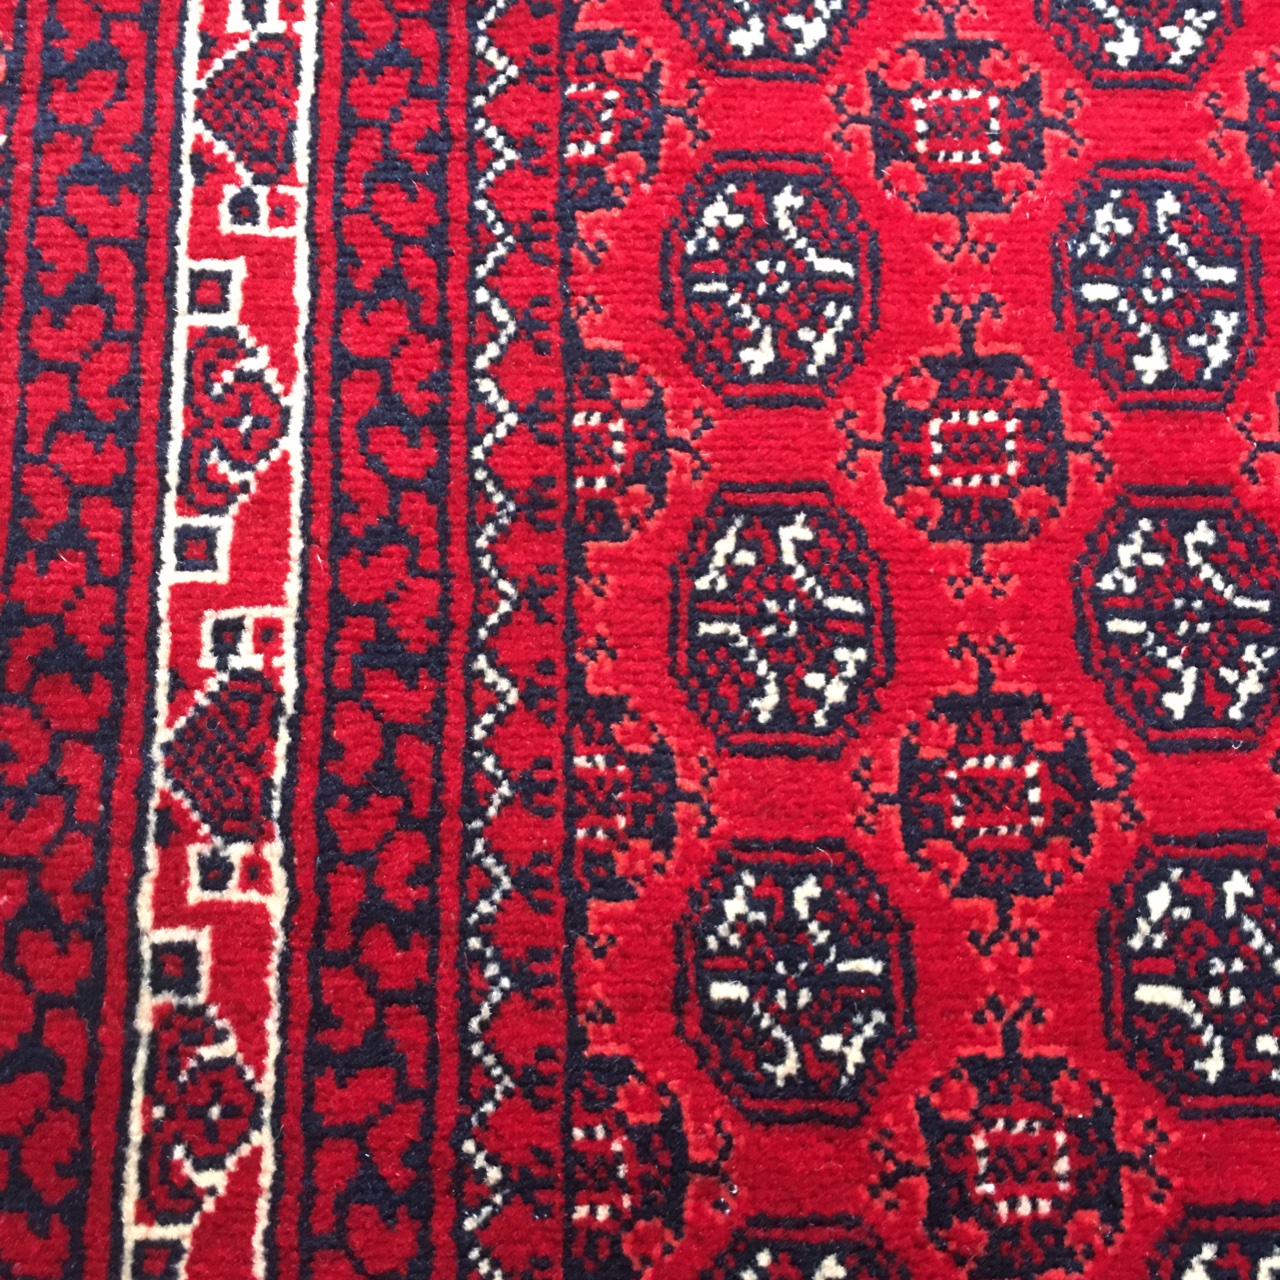 191×152cm アフガニスタン 絨毯手織り ファインホジャロシュナイ